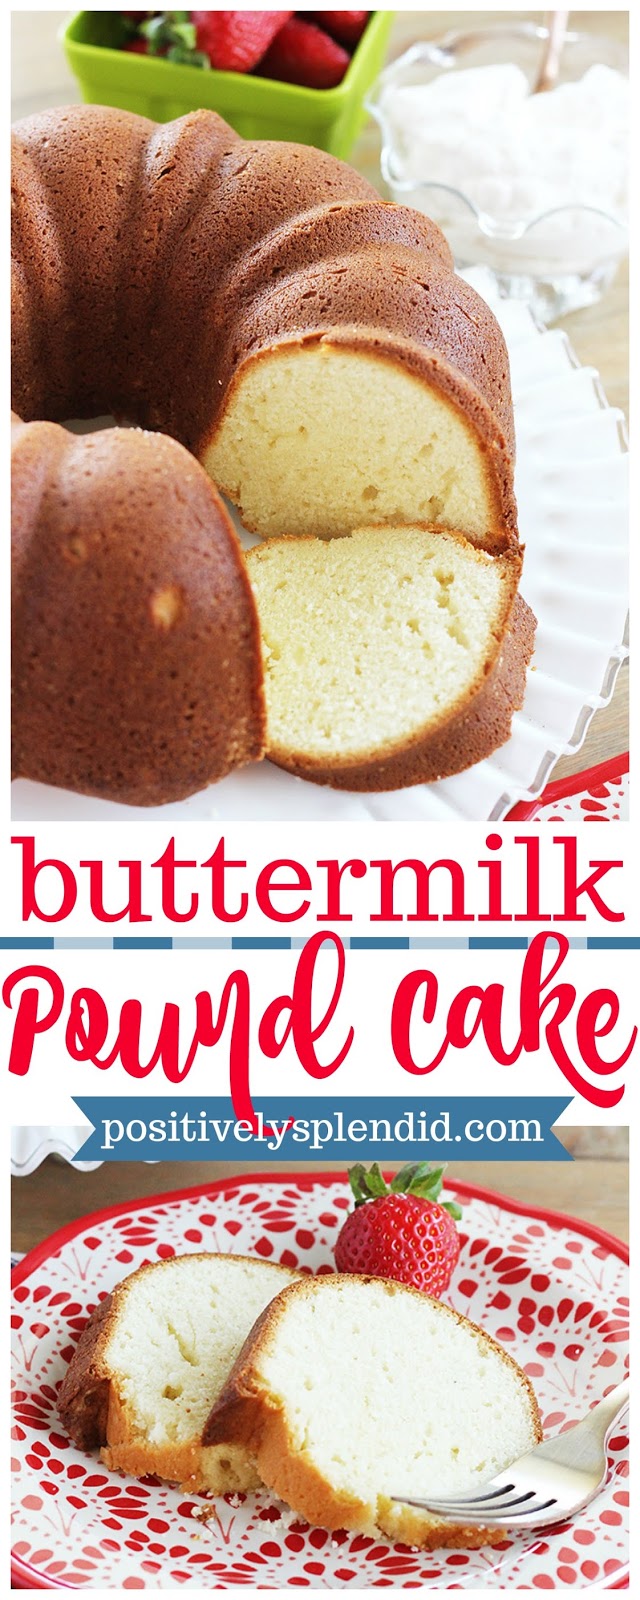 BUTTERMILK POUND CAKE - Delicious Cuisine Recipes